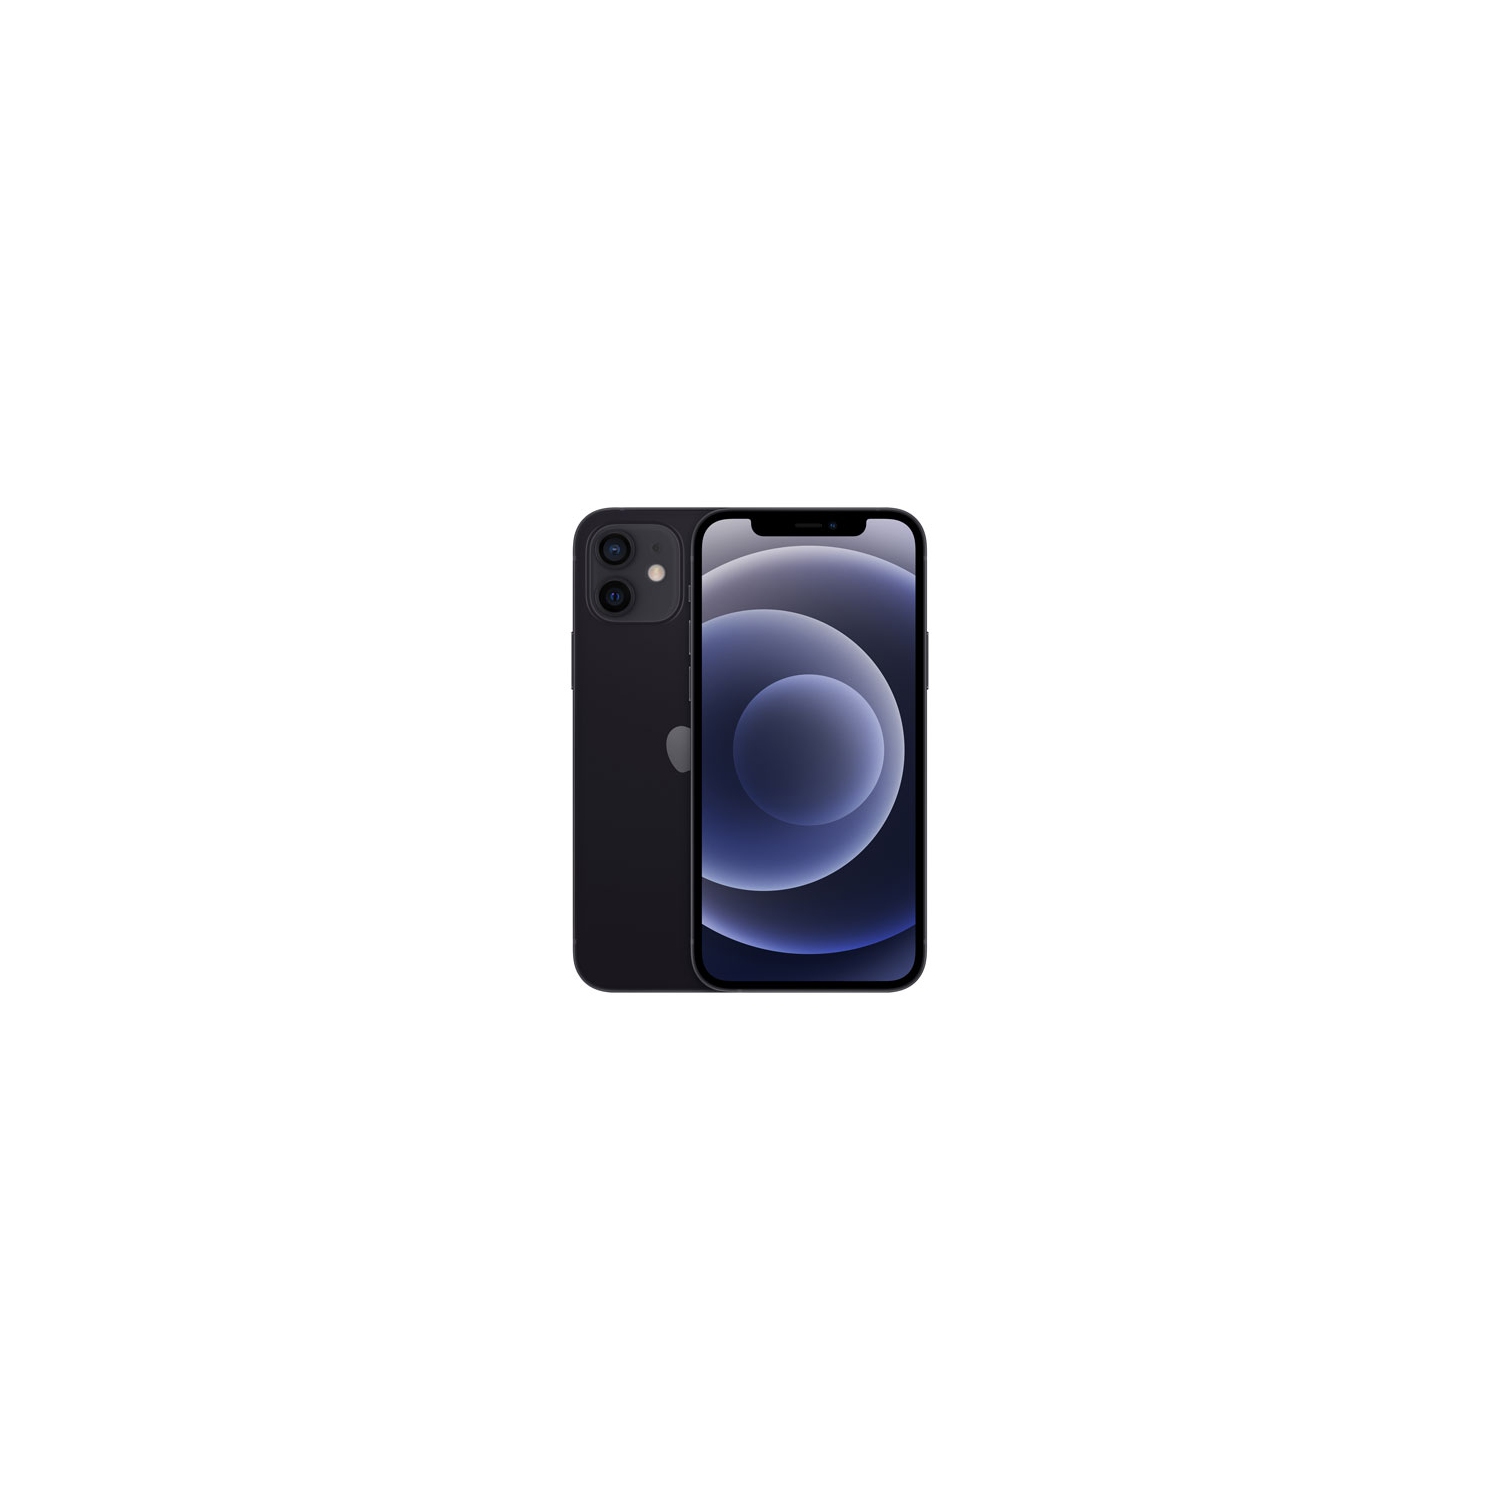 Refurbished (Good) - Apple iPhone 12 256GB - Black - Unlocked